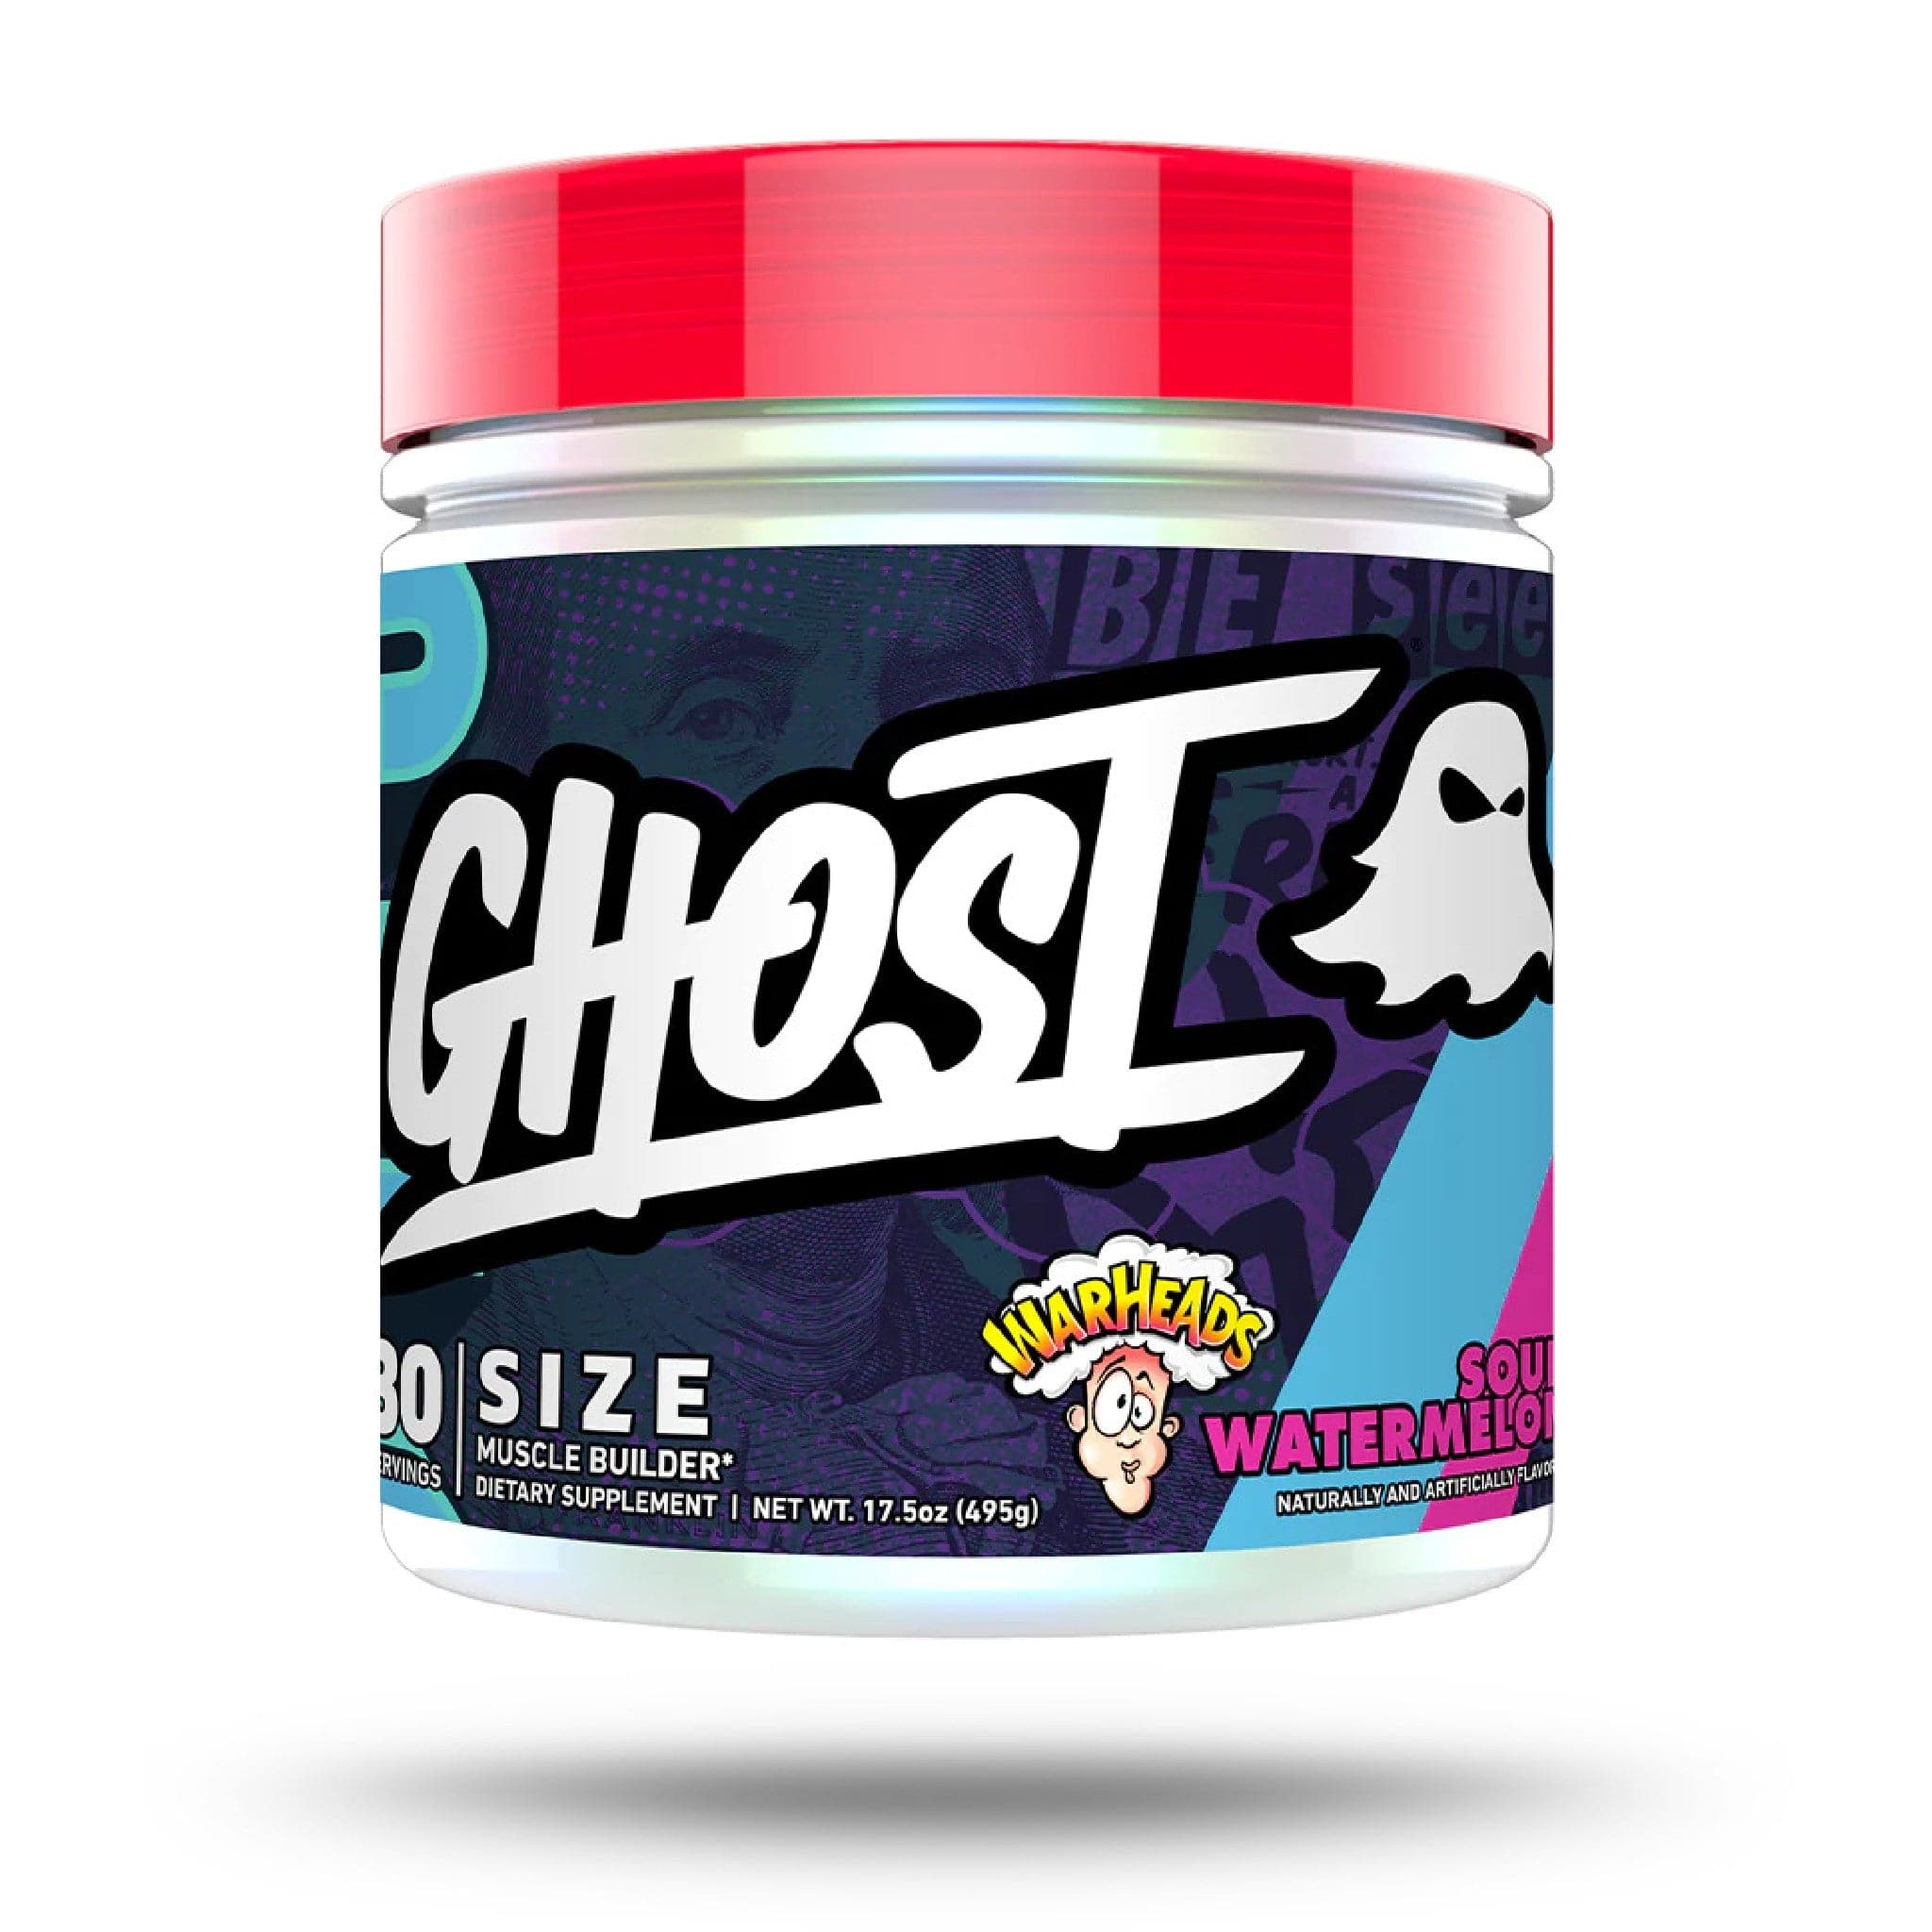 GHOST Size v2 30 servings